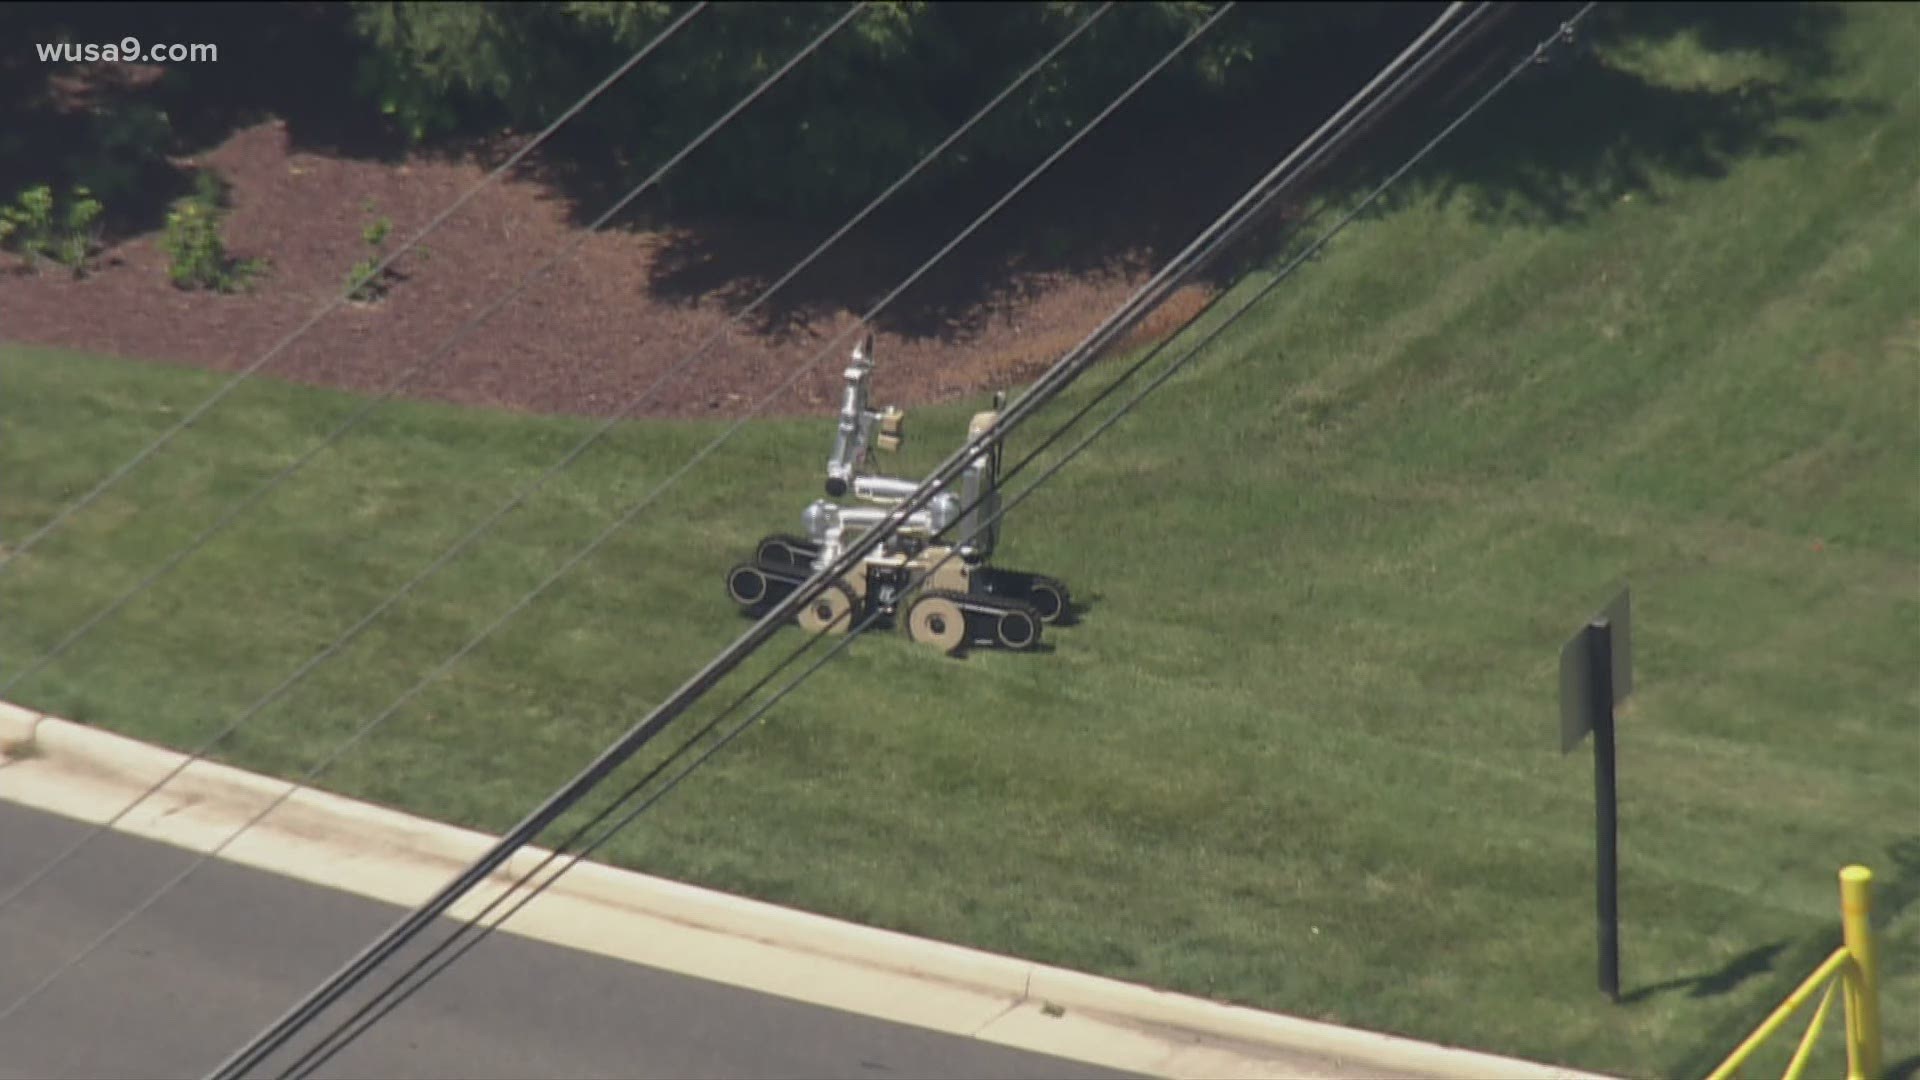 Suspicious device found near CIA headquarters in McLean, VA prompts police response.